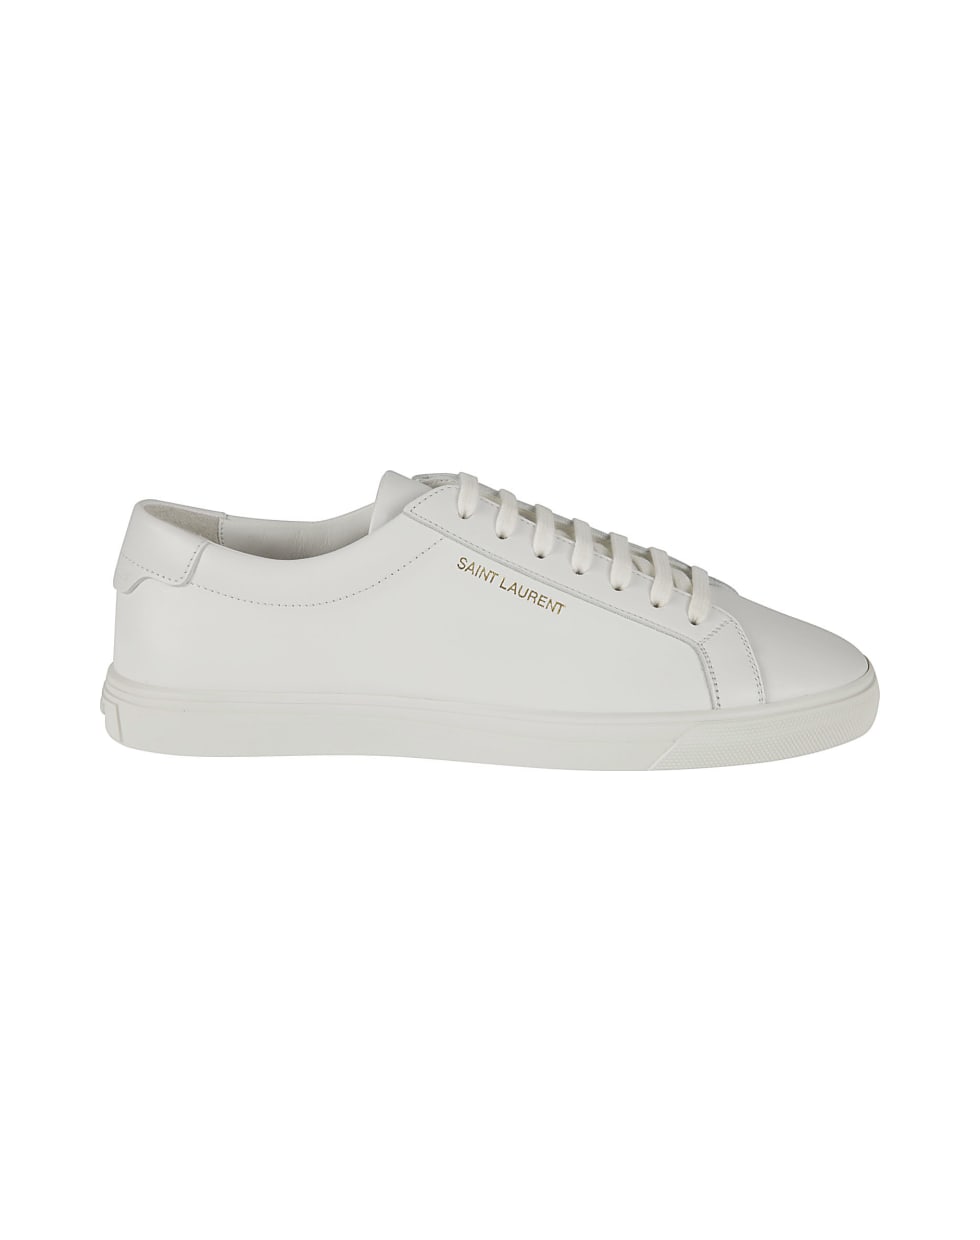 Saint Laurent Nandy Sneakers - Optic White